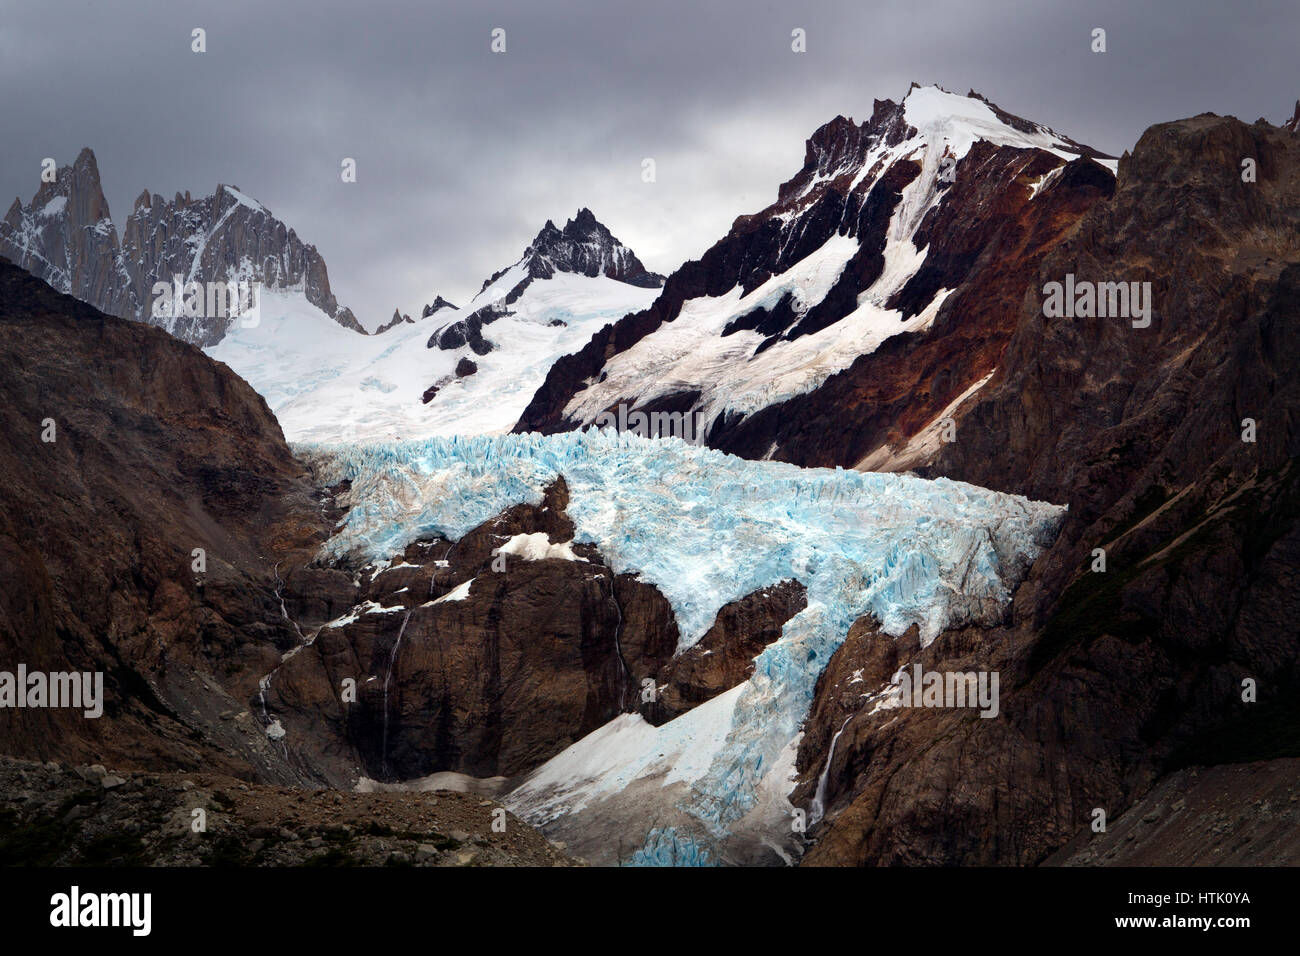 Glaciar Piedras Blancas next to Mount Fitz Roy, Los Glaciares National Park, Patagonia, Argentina Stock Photo